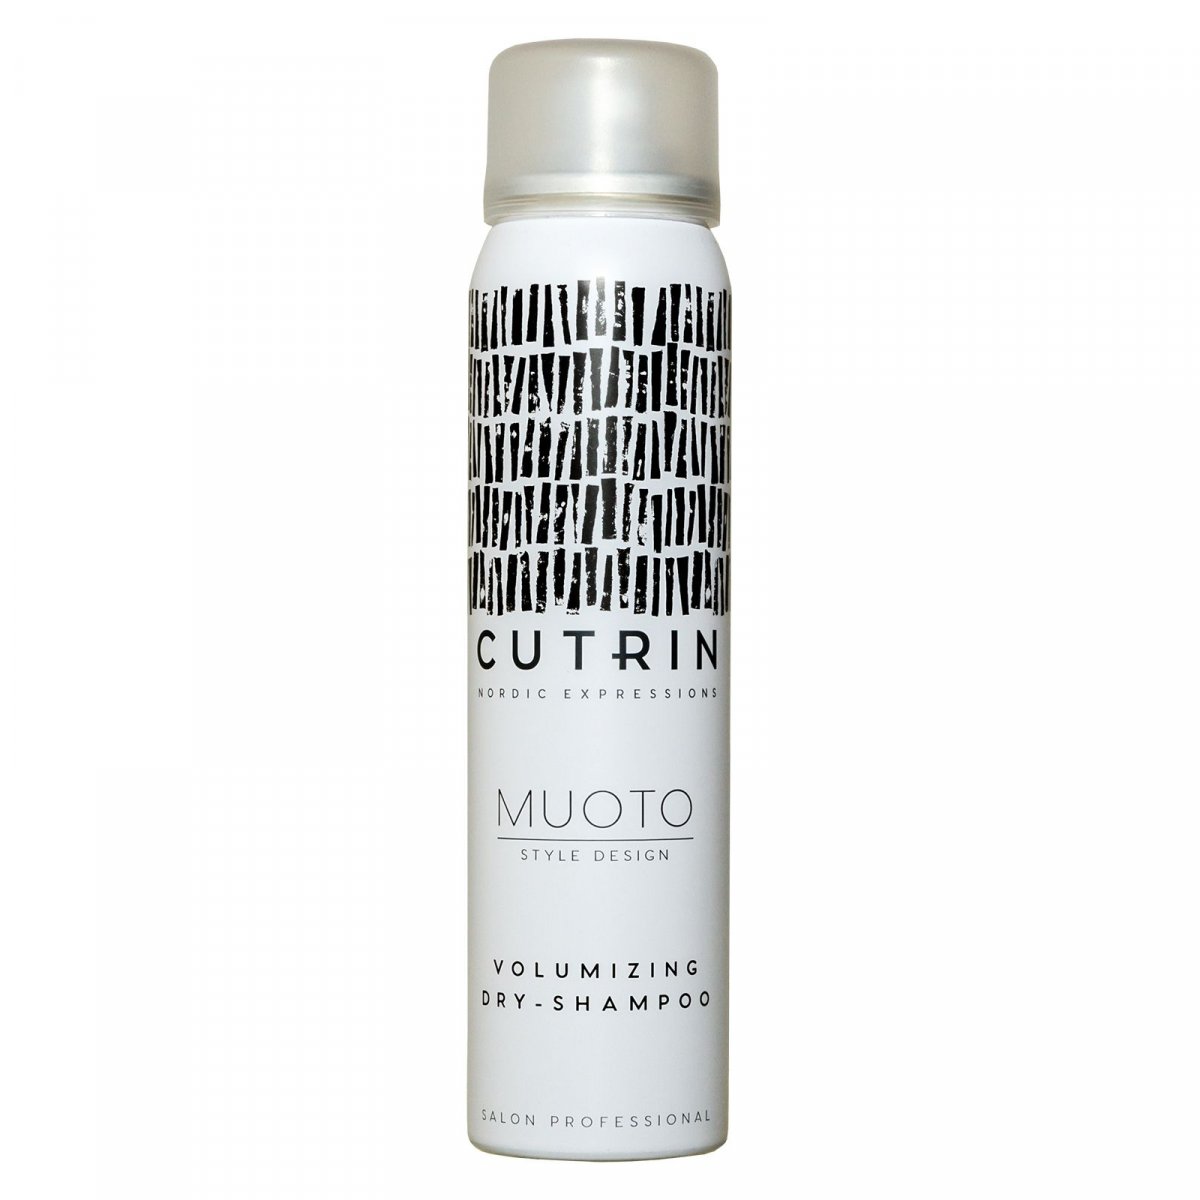 Cutrin Muoto Volumizing Dry Shampoo - Сухой шампунь для объема 100 мл Cutrin (Финляндия) купить по цене 527 руб.